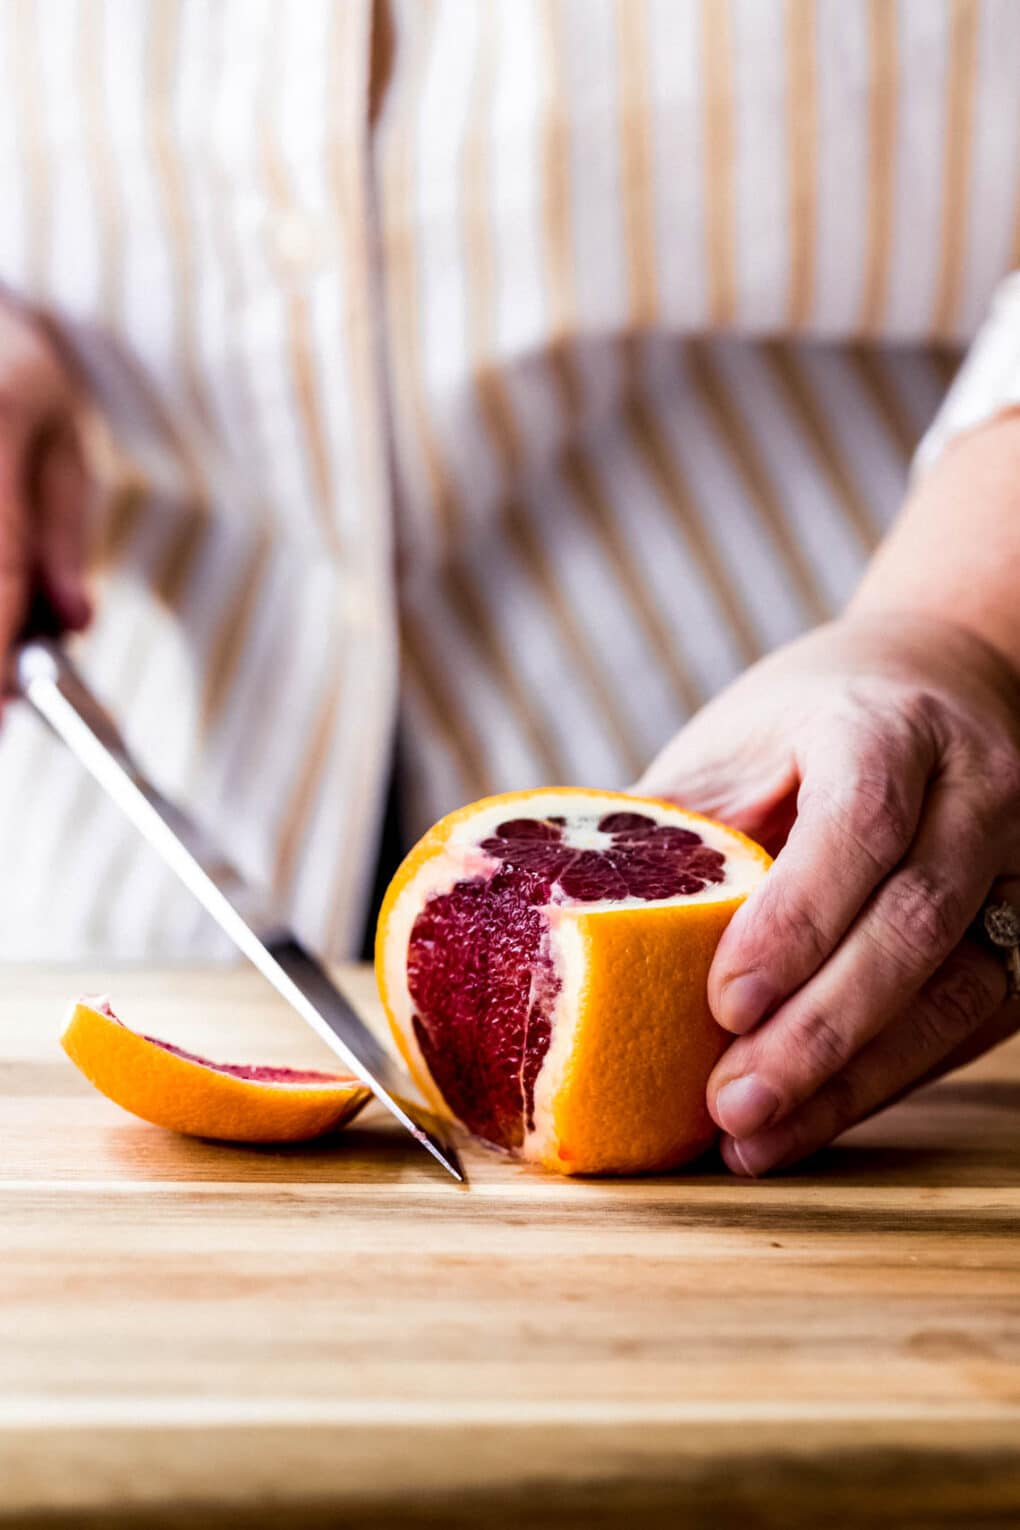 Woman cutting a peel off of an orange